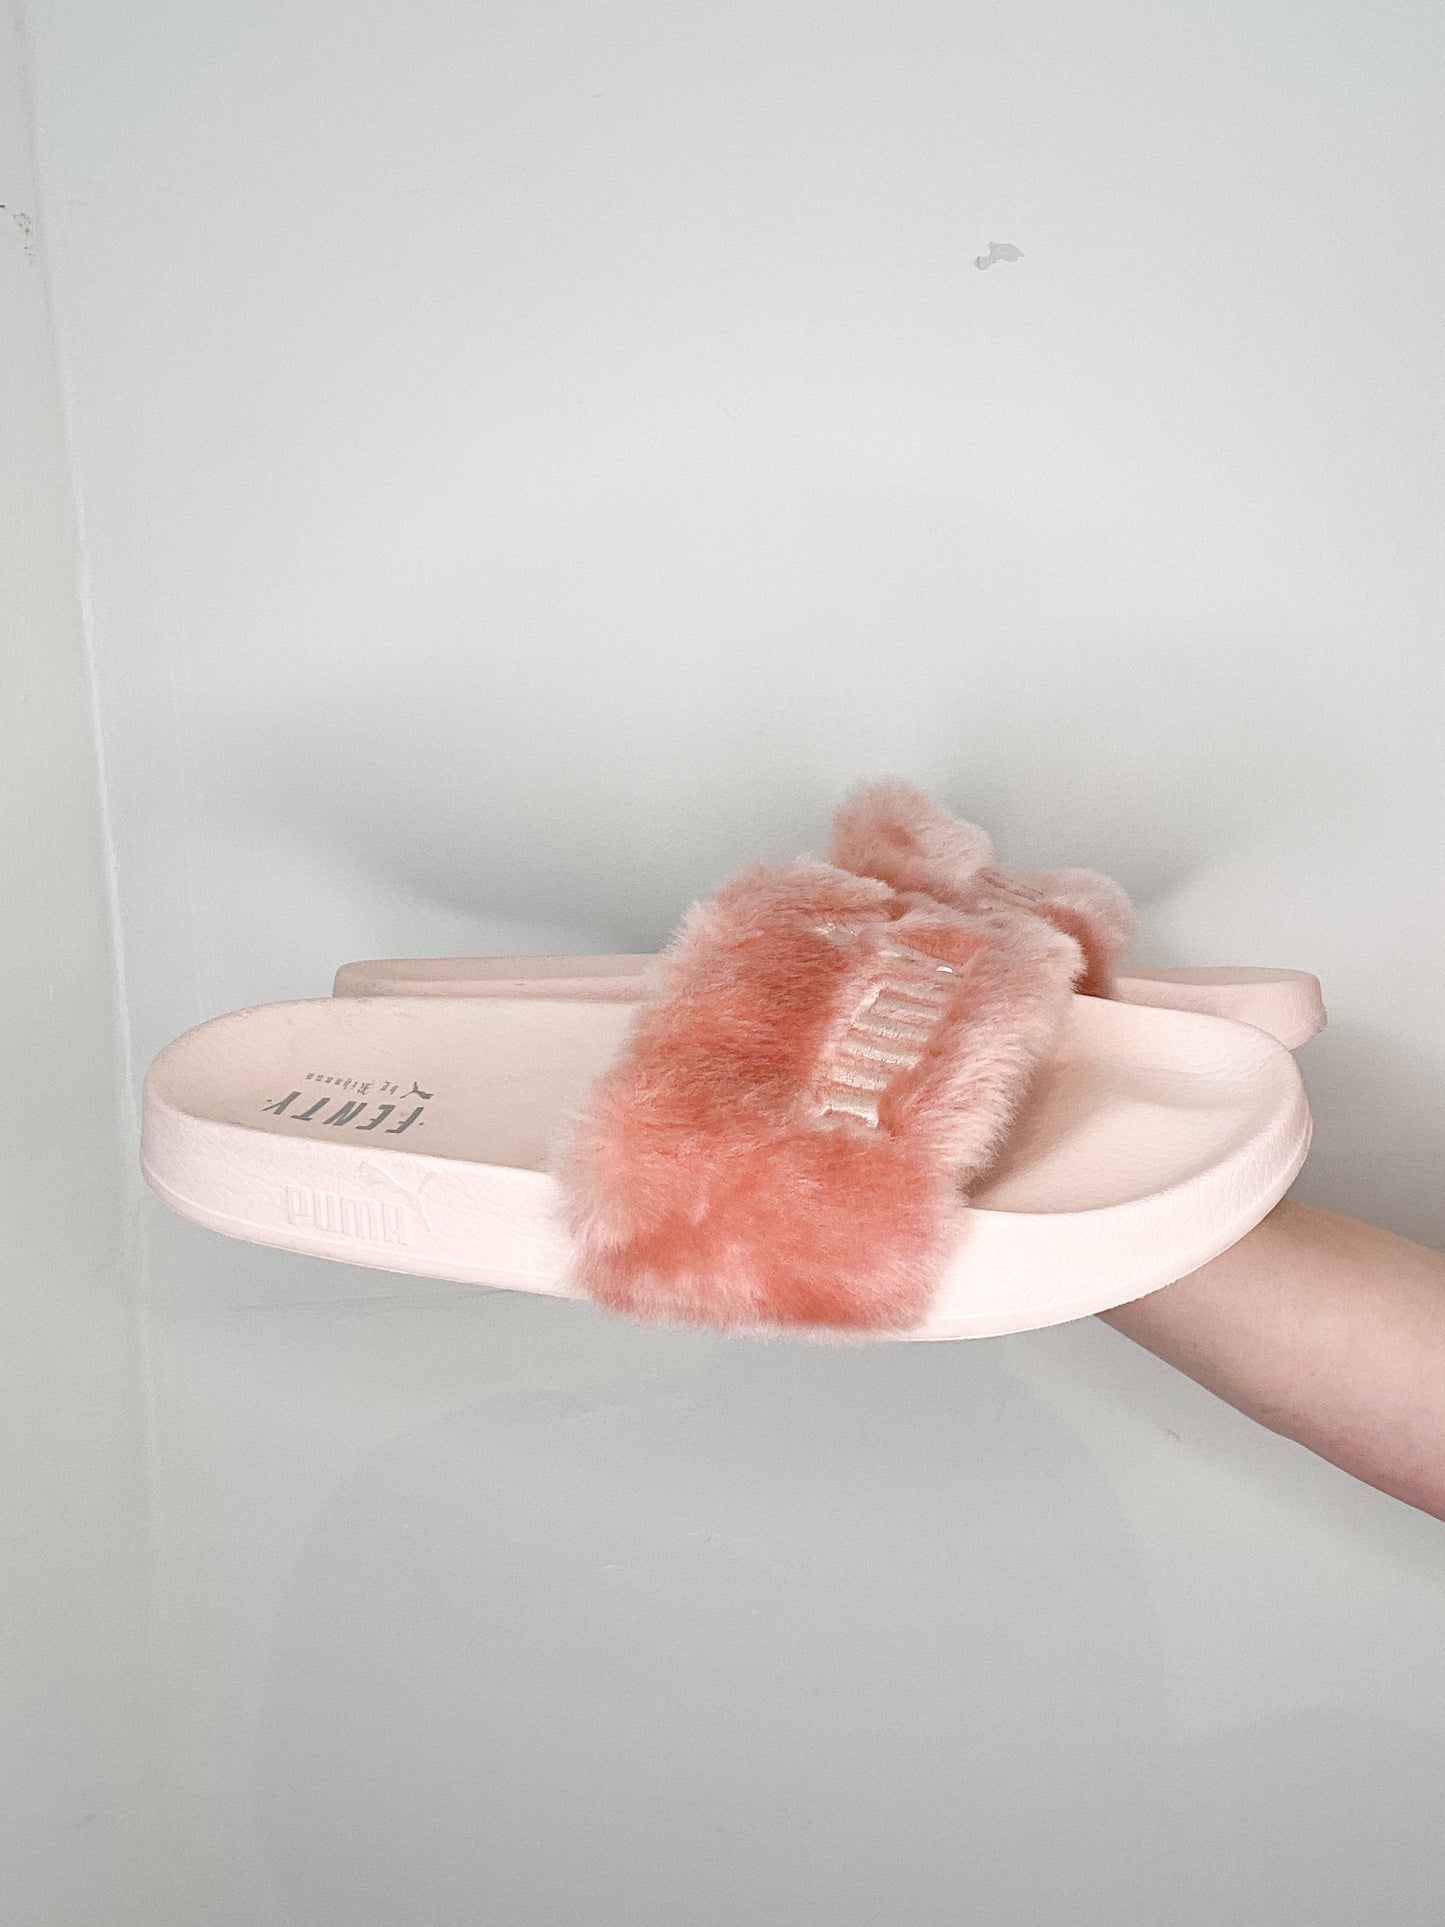 Fenty X Puma Light Pink Fuzzy Slide Shoes - Size 9